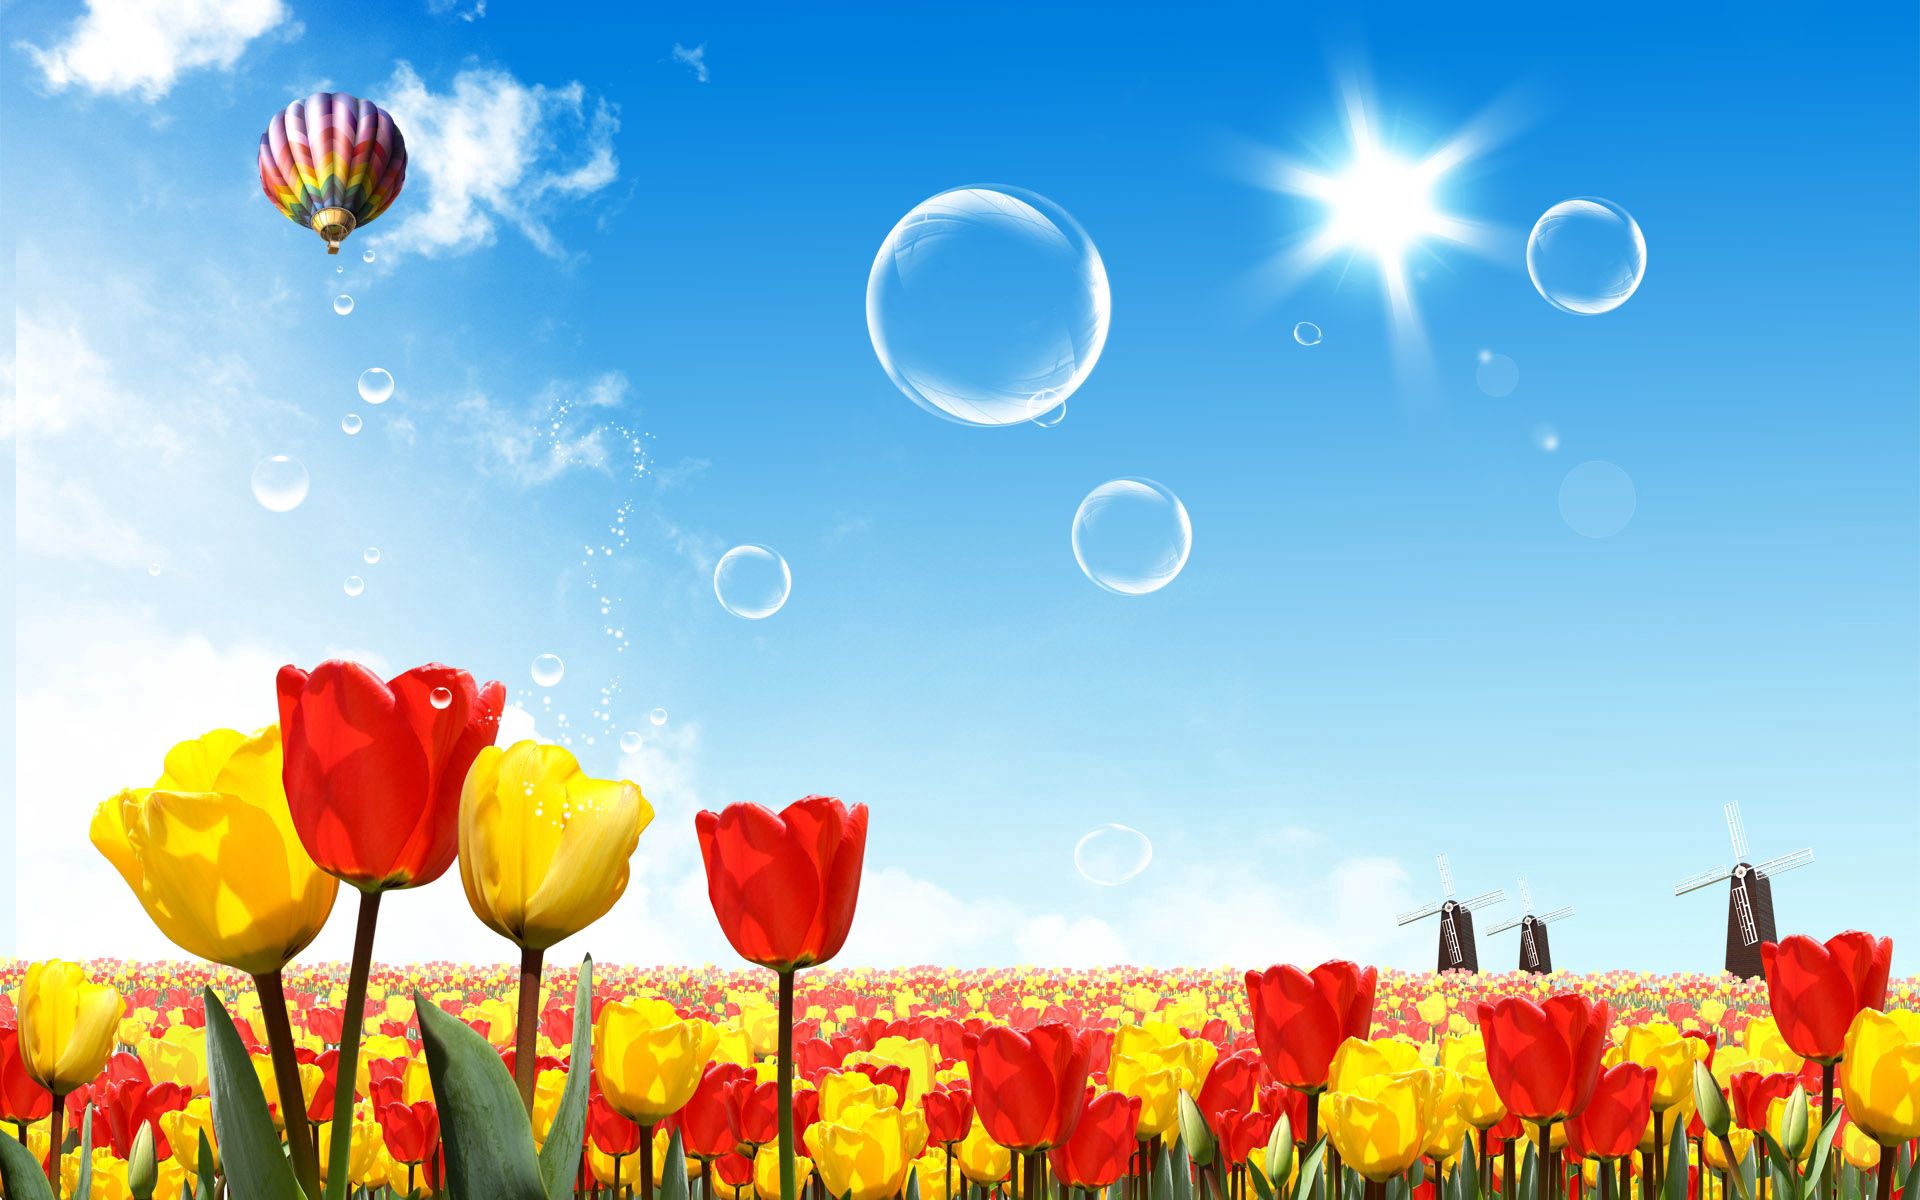 121566 Hintergrundbild herunterladen sky, sun, tulpen, vektor, luftballon, ballon - Bildschirmschoner und Bilder kostenlos